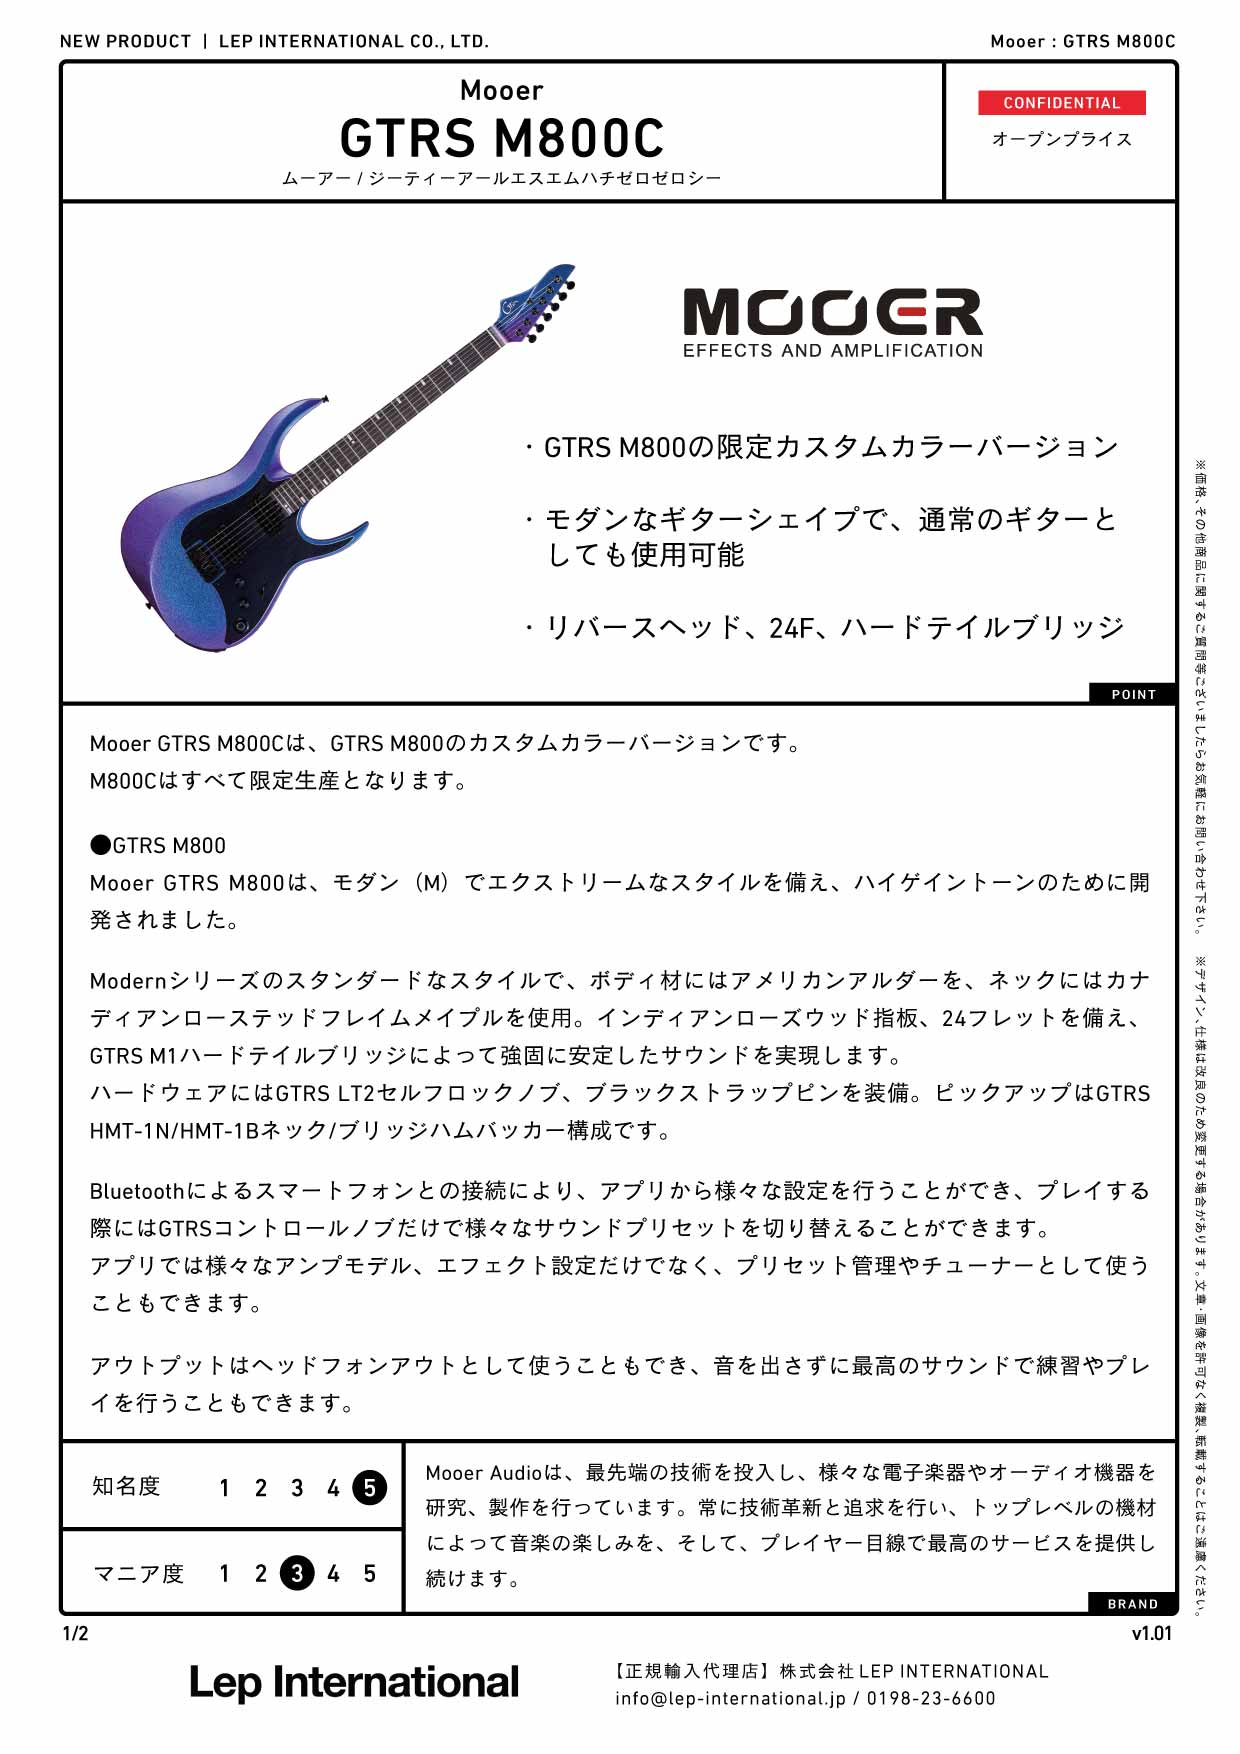 Mooer / GTRS M800C